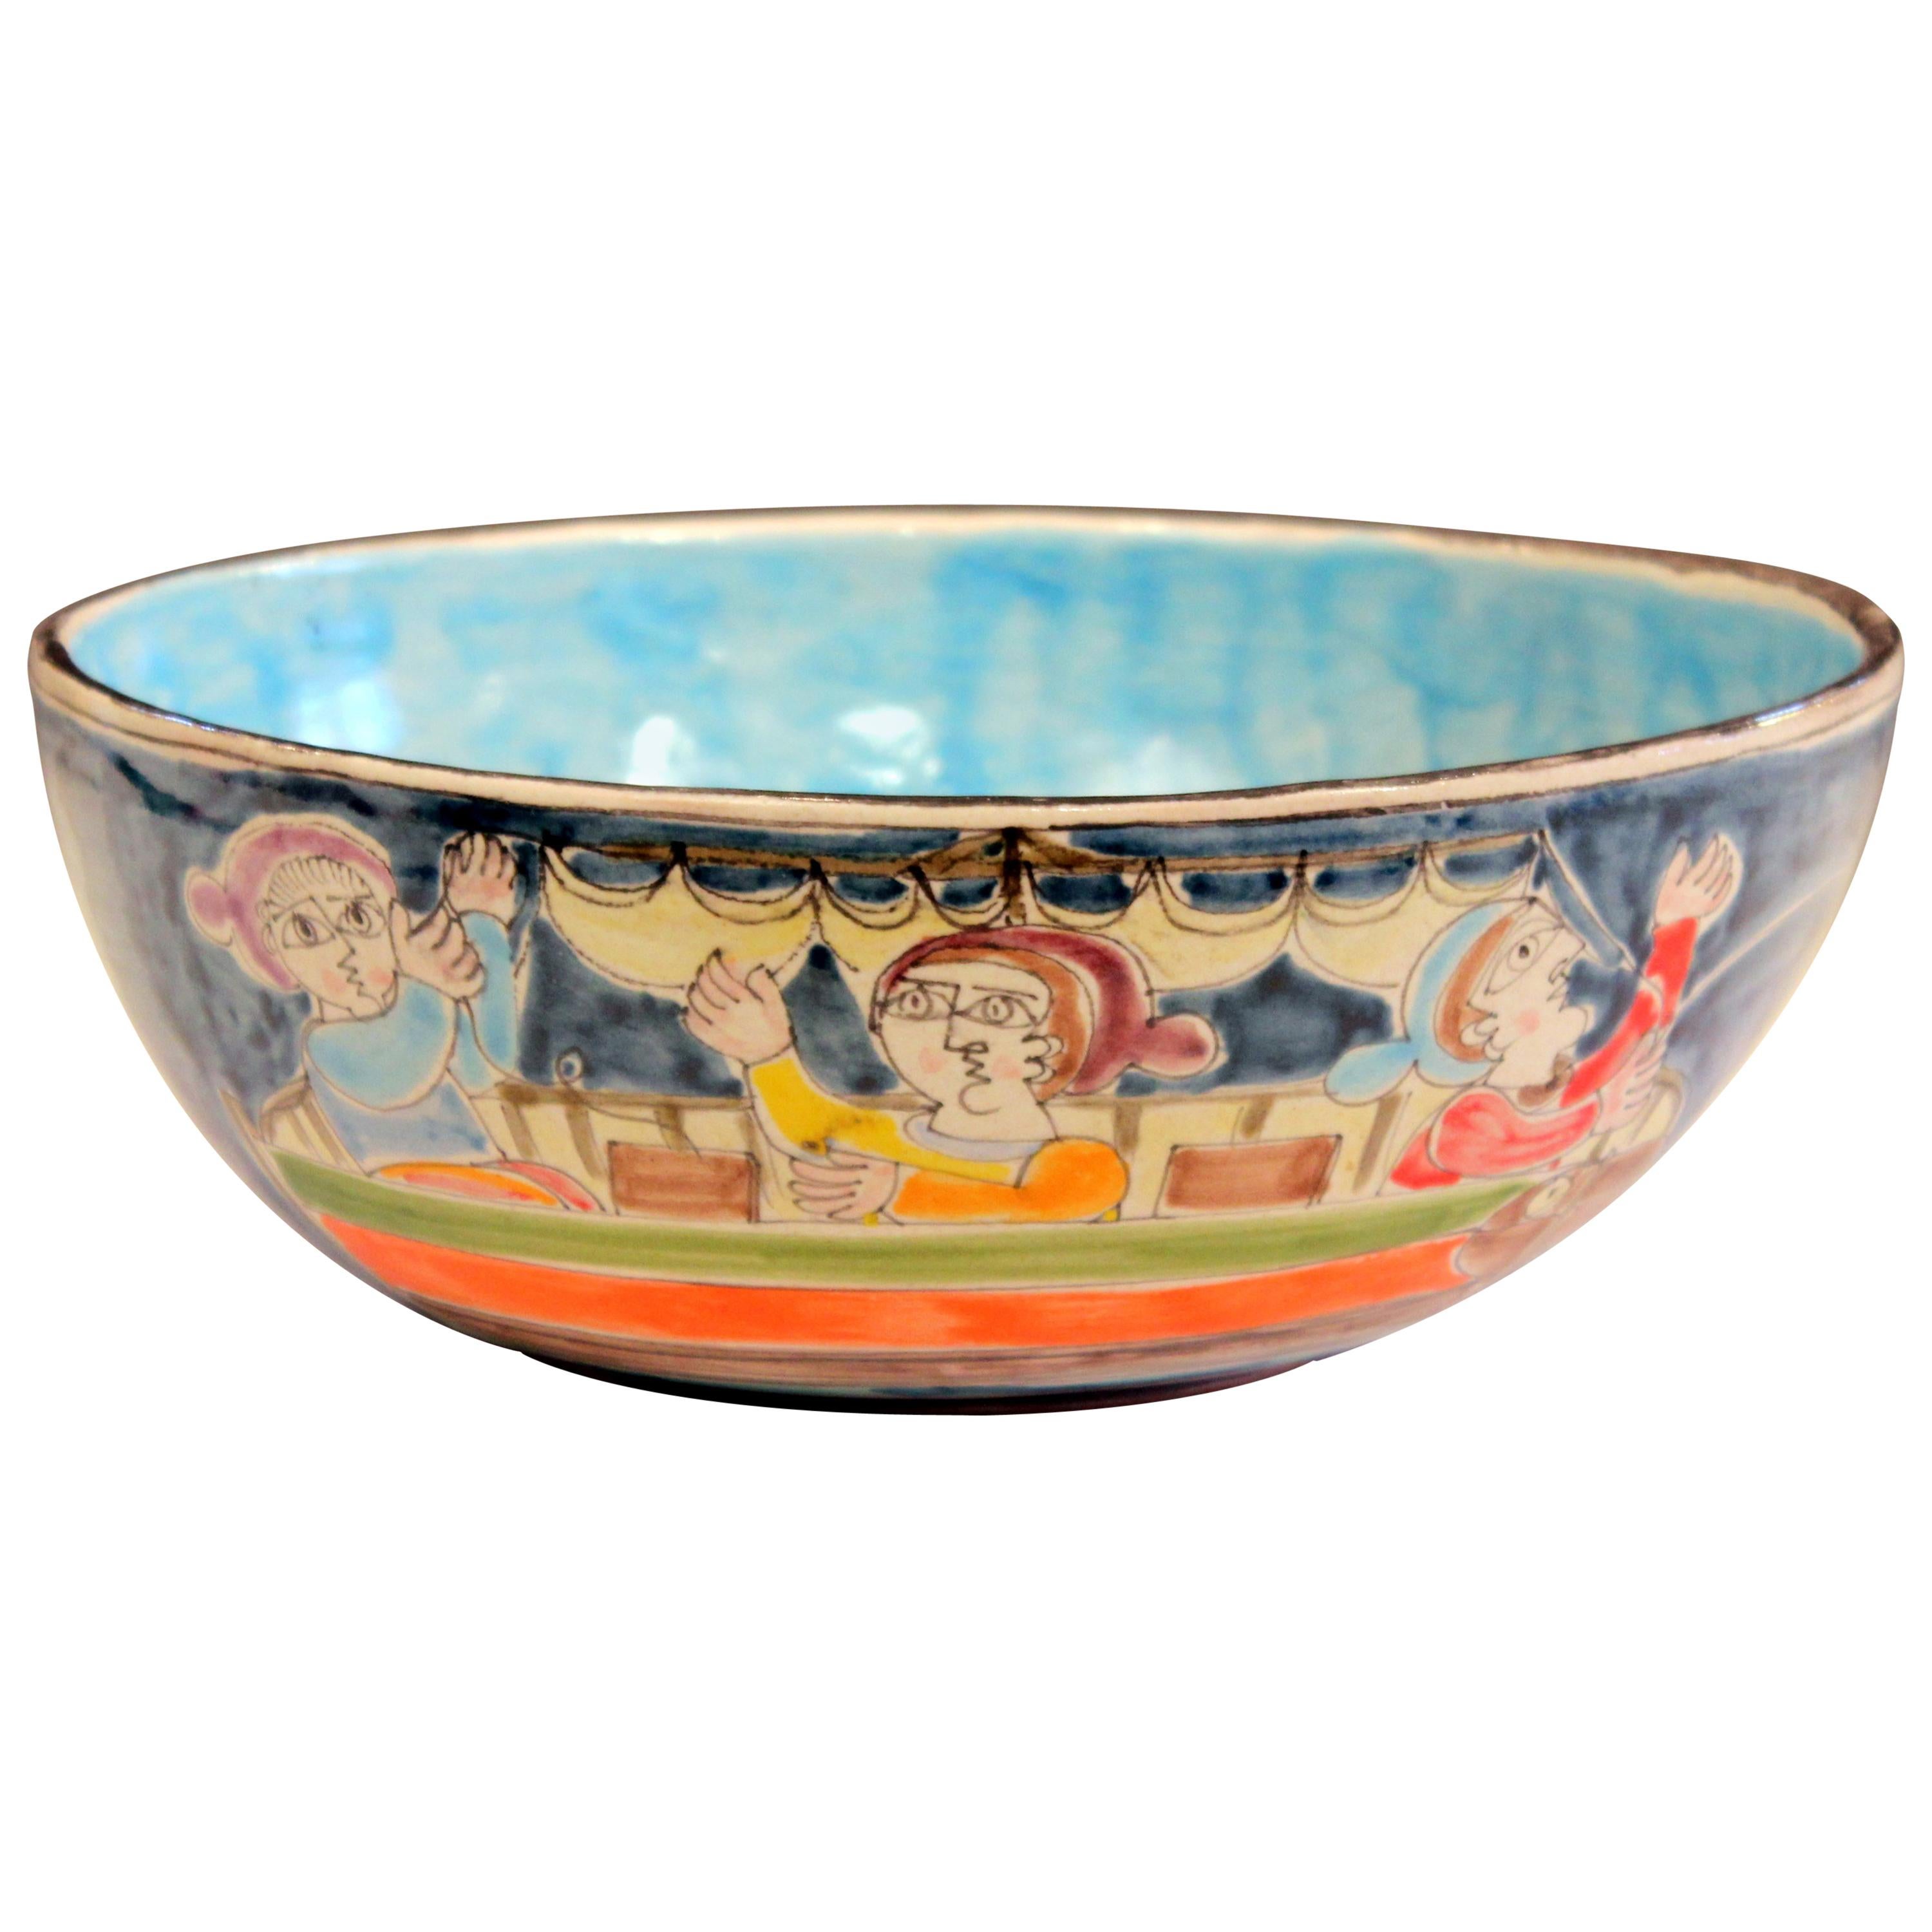 DeSimone Italian Pottery Centerpiece Bowl Ceramic Vintage